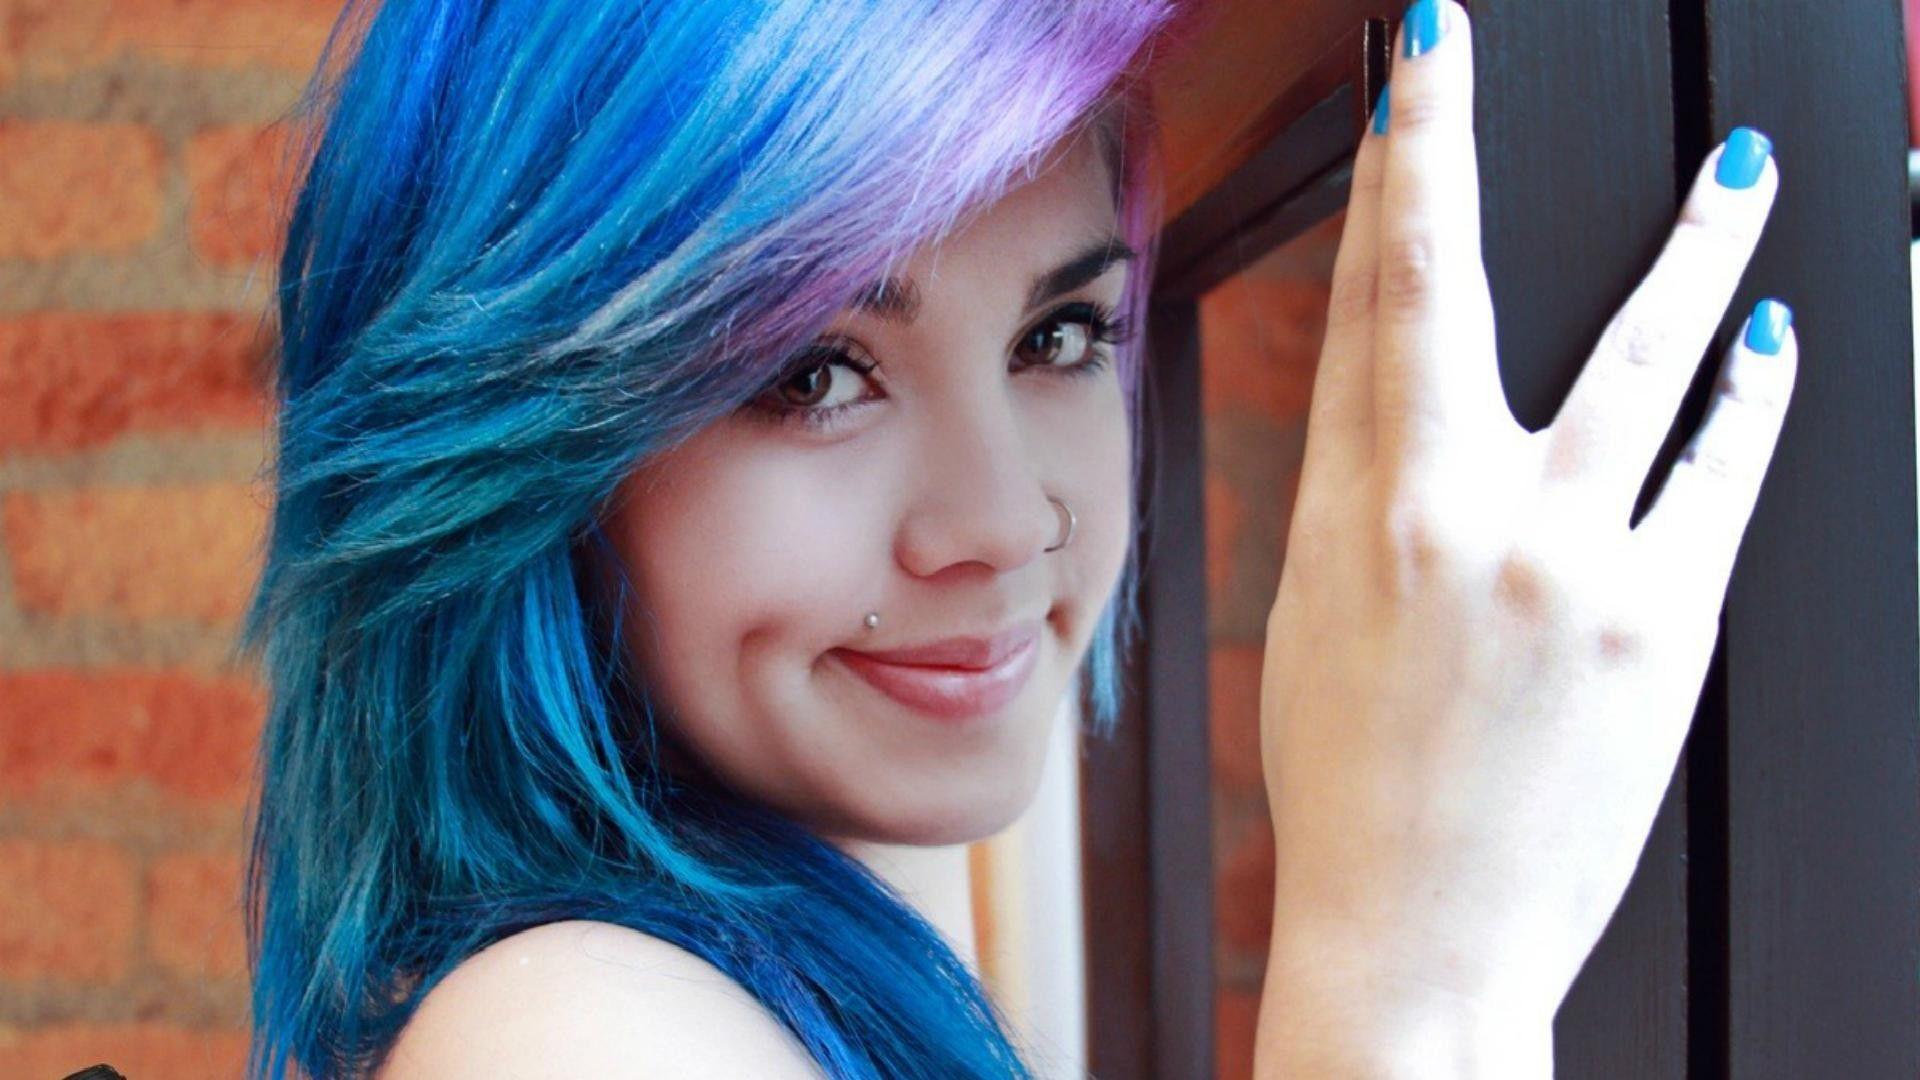 Blue and Purple hair. Hair. Emo girl wallpaper, Emo